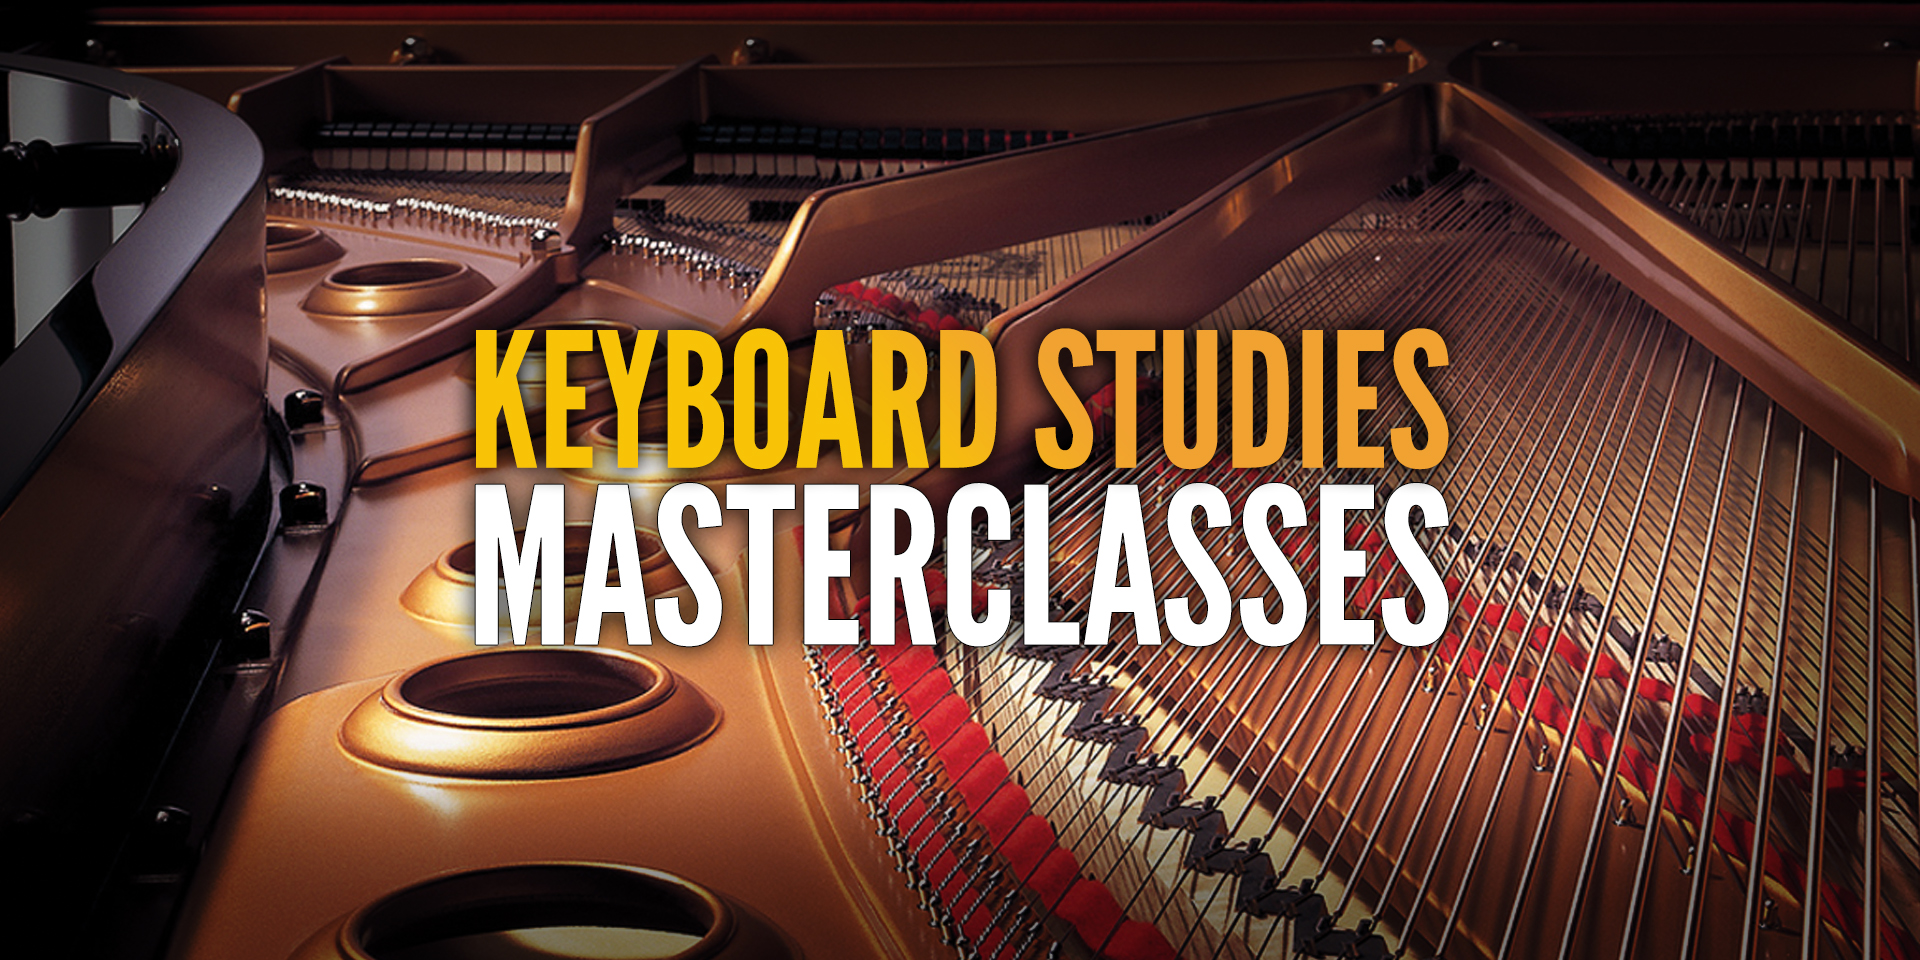 Keyboard Studies Masterclasses.